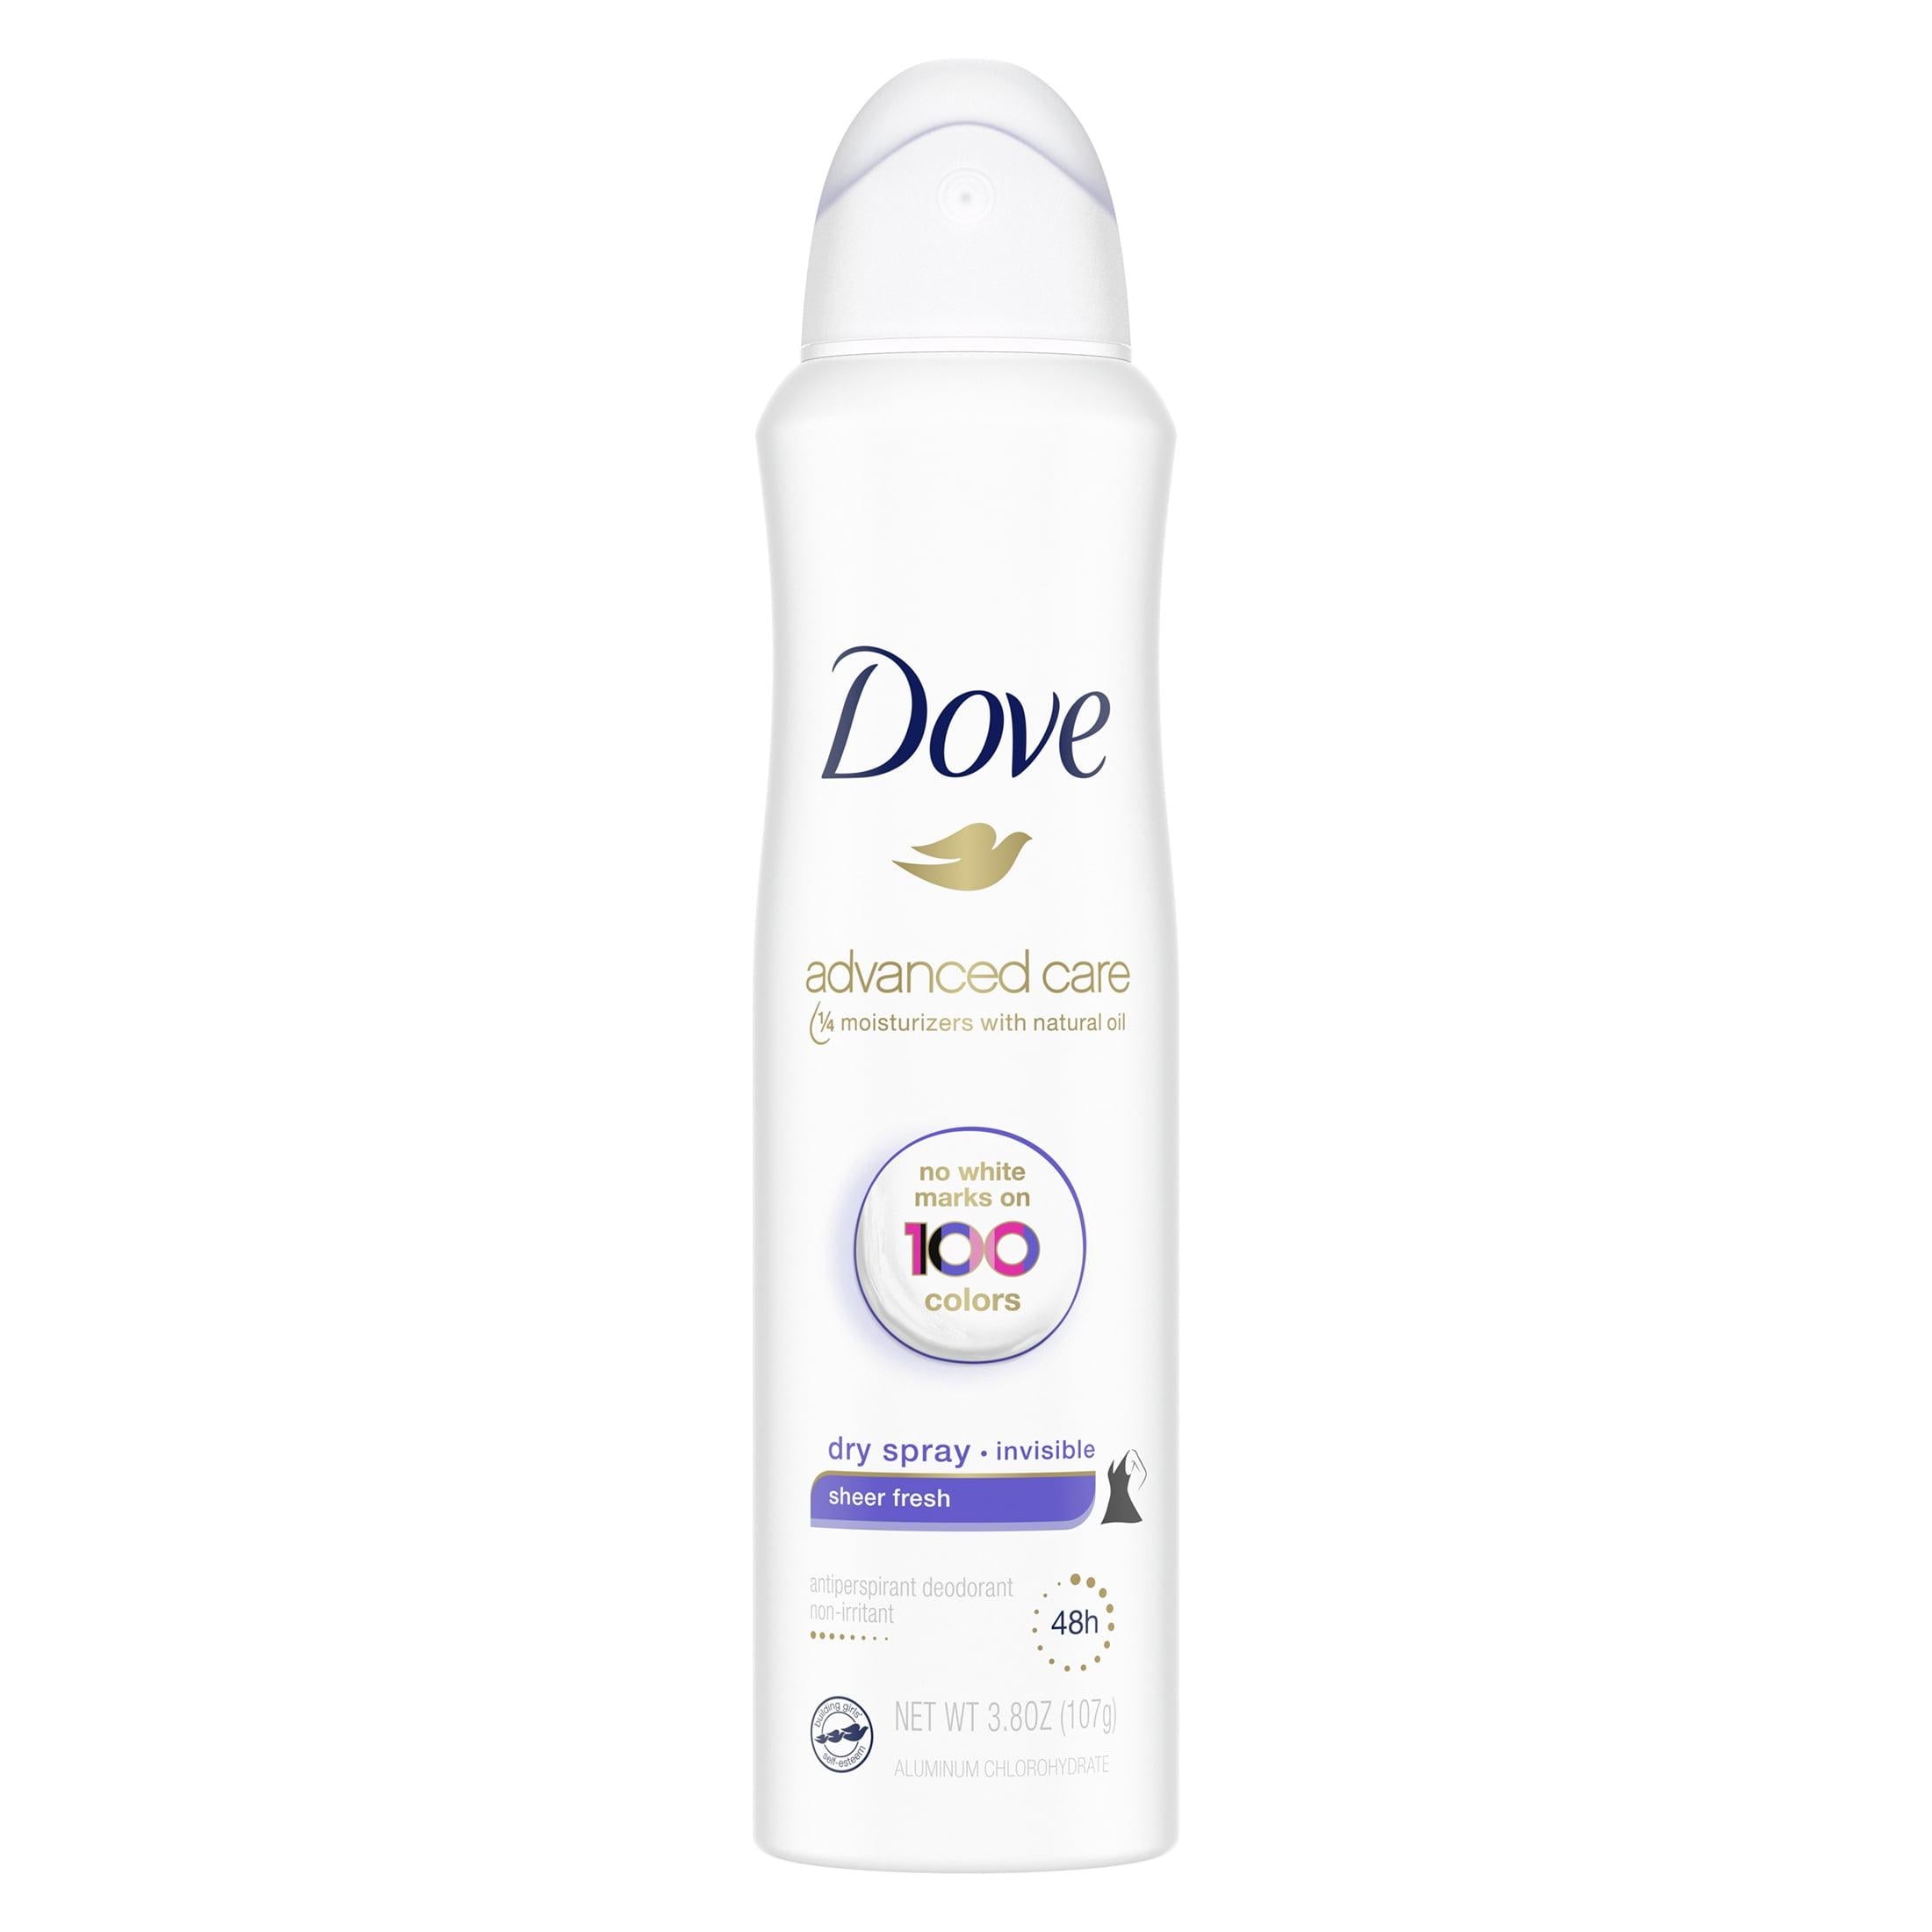 Dove Advanced Care Long Lasting Antiperspirant Deodorant Dry Spray, Sheer Fresh, 3.8 oz | MTTS240